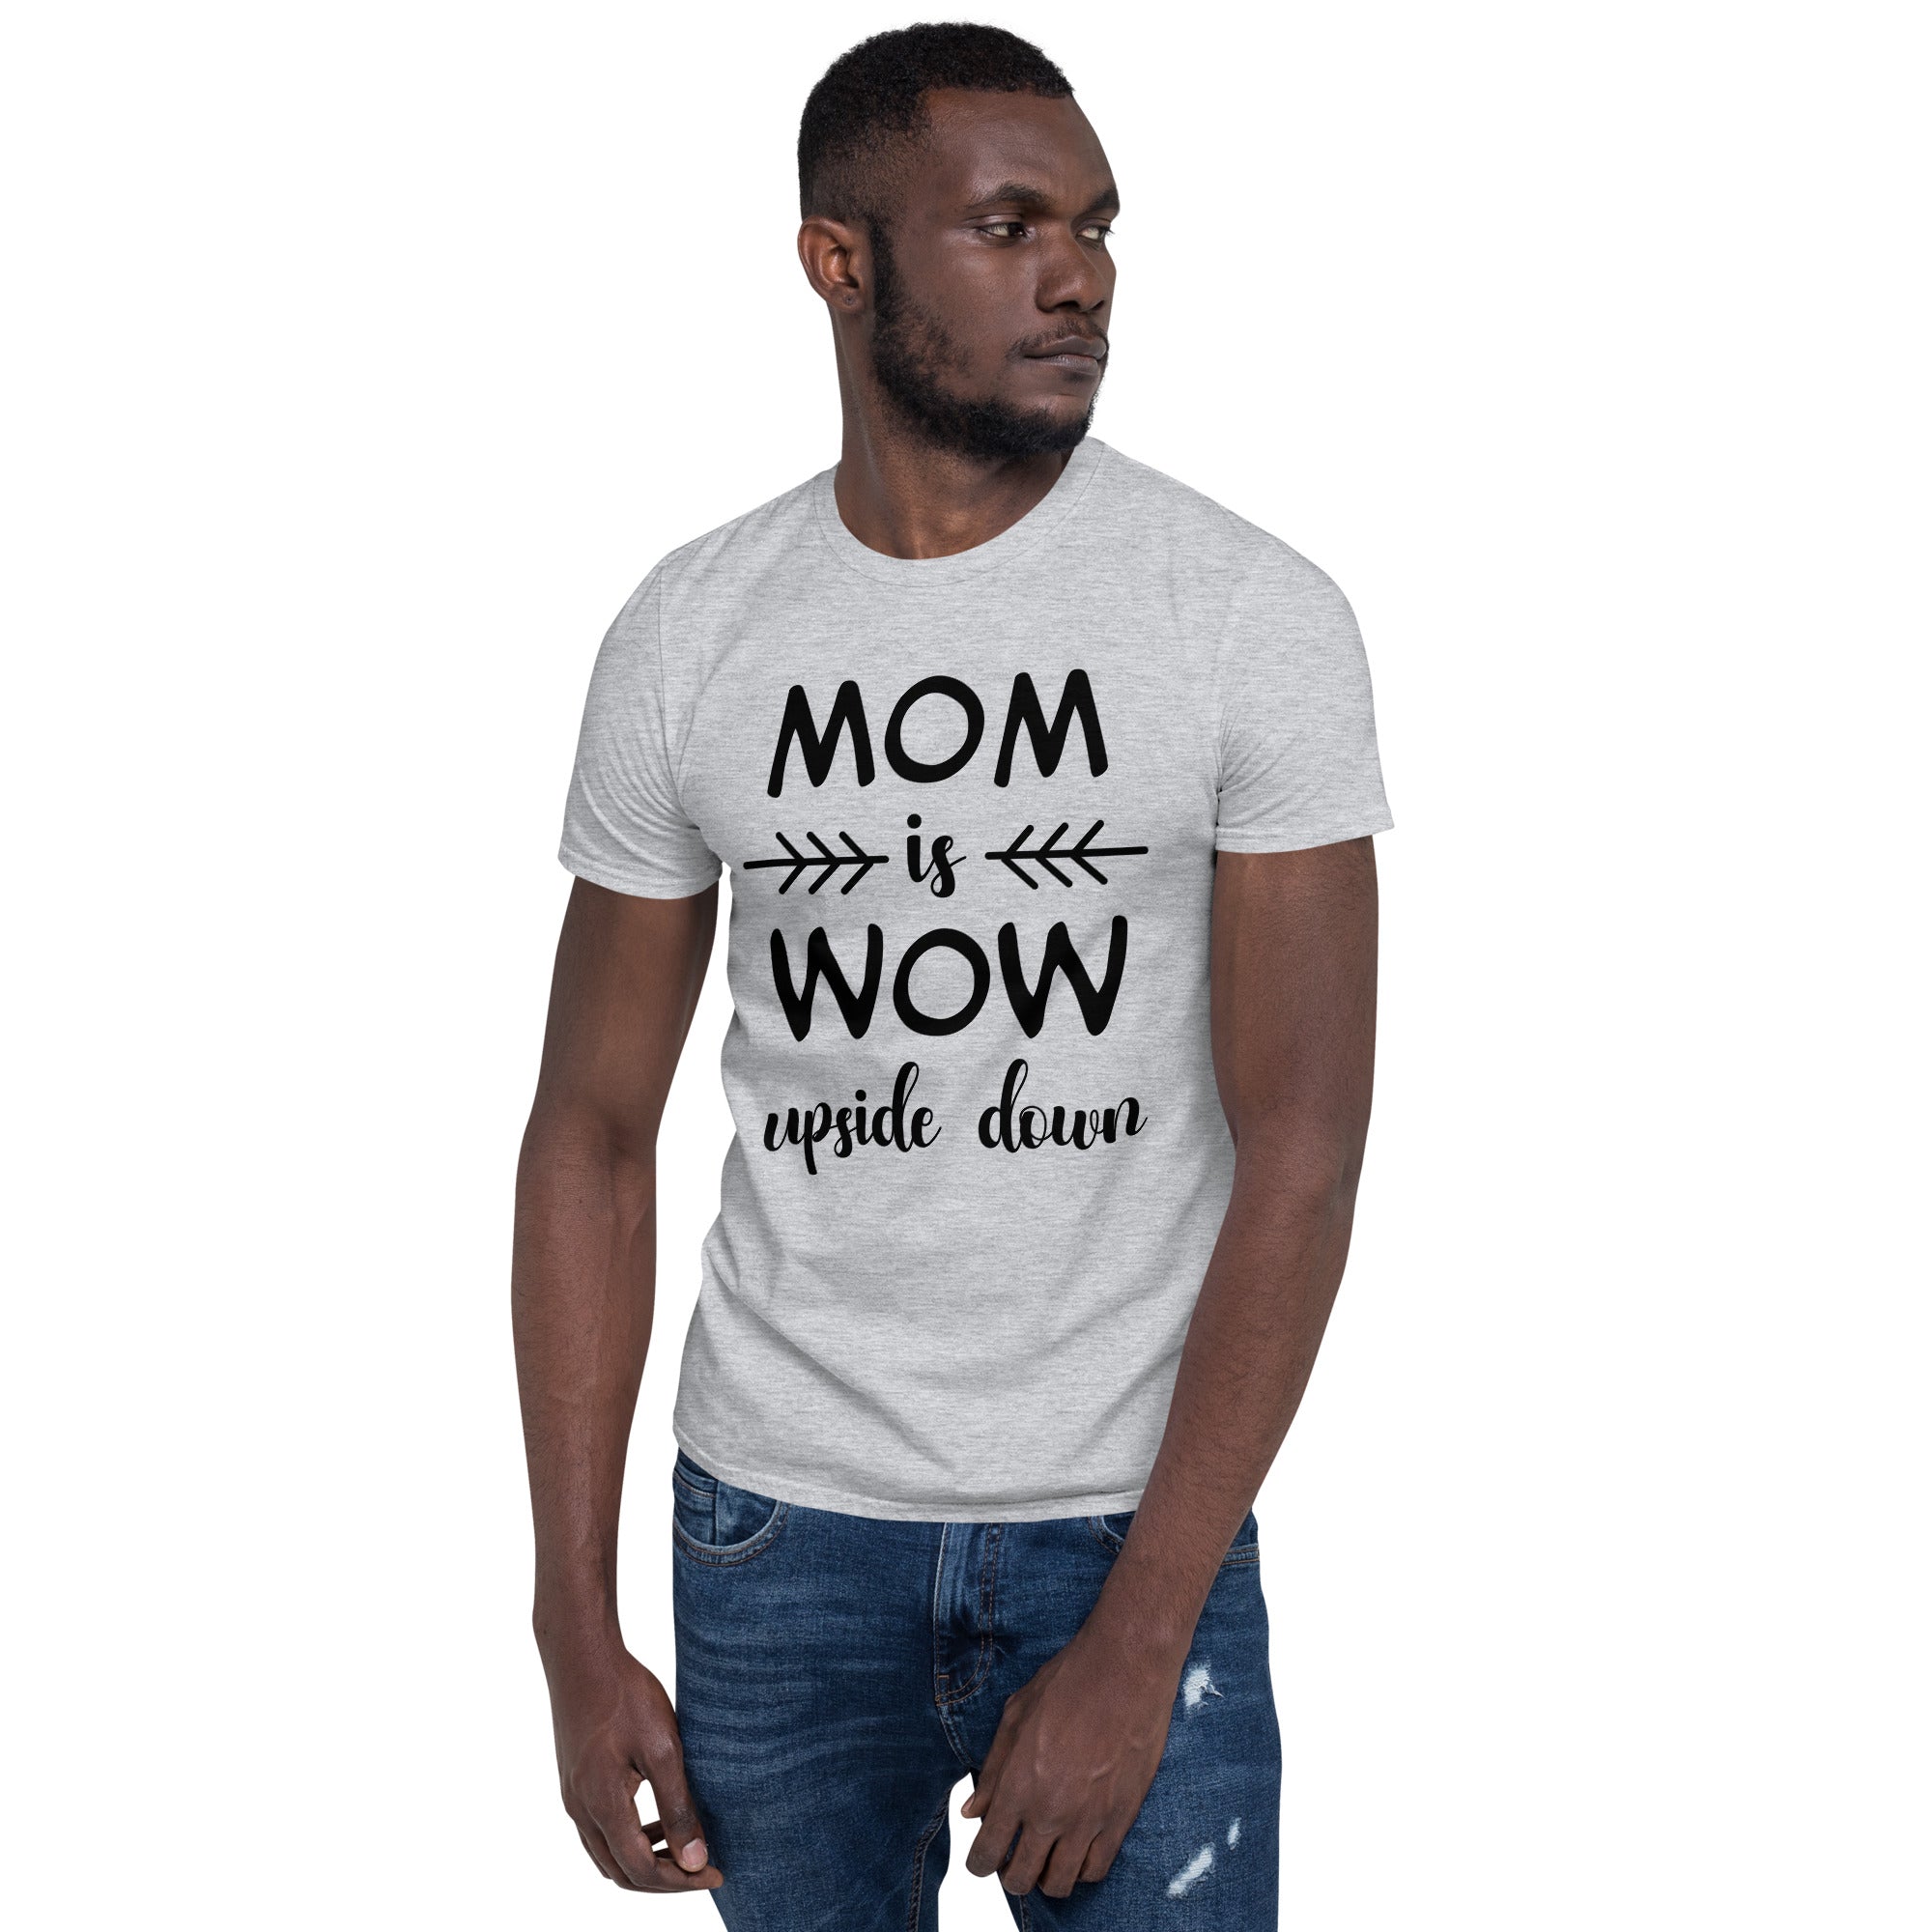 Mom Is Wow - Short-Sleeve Unisex T-Shirt